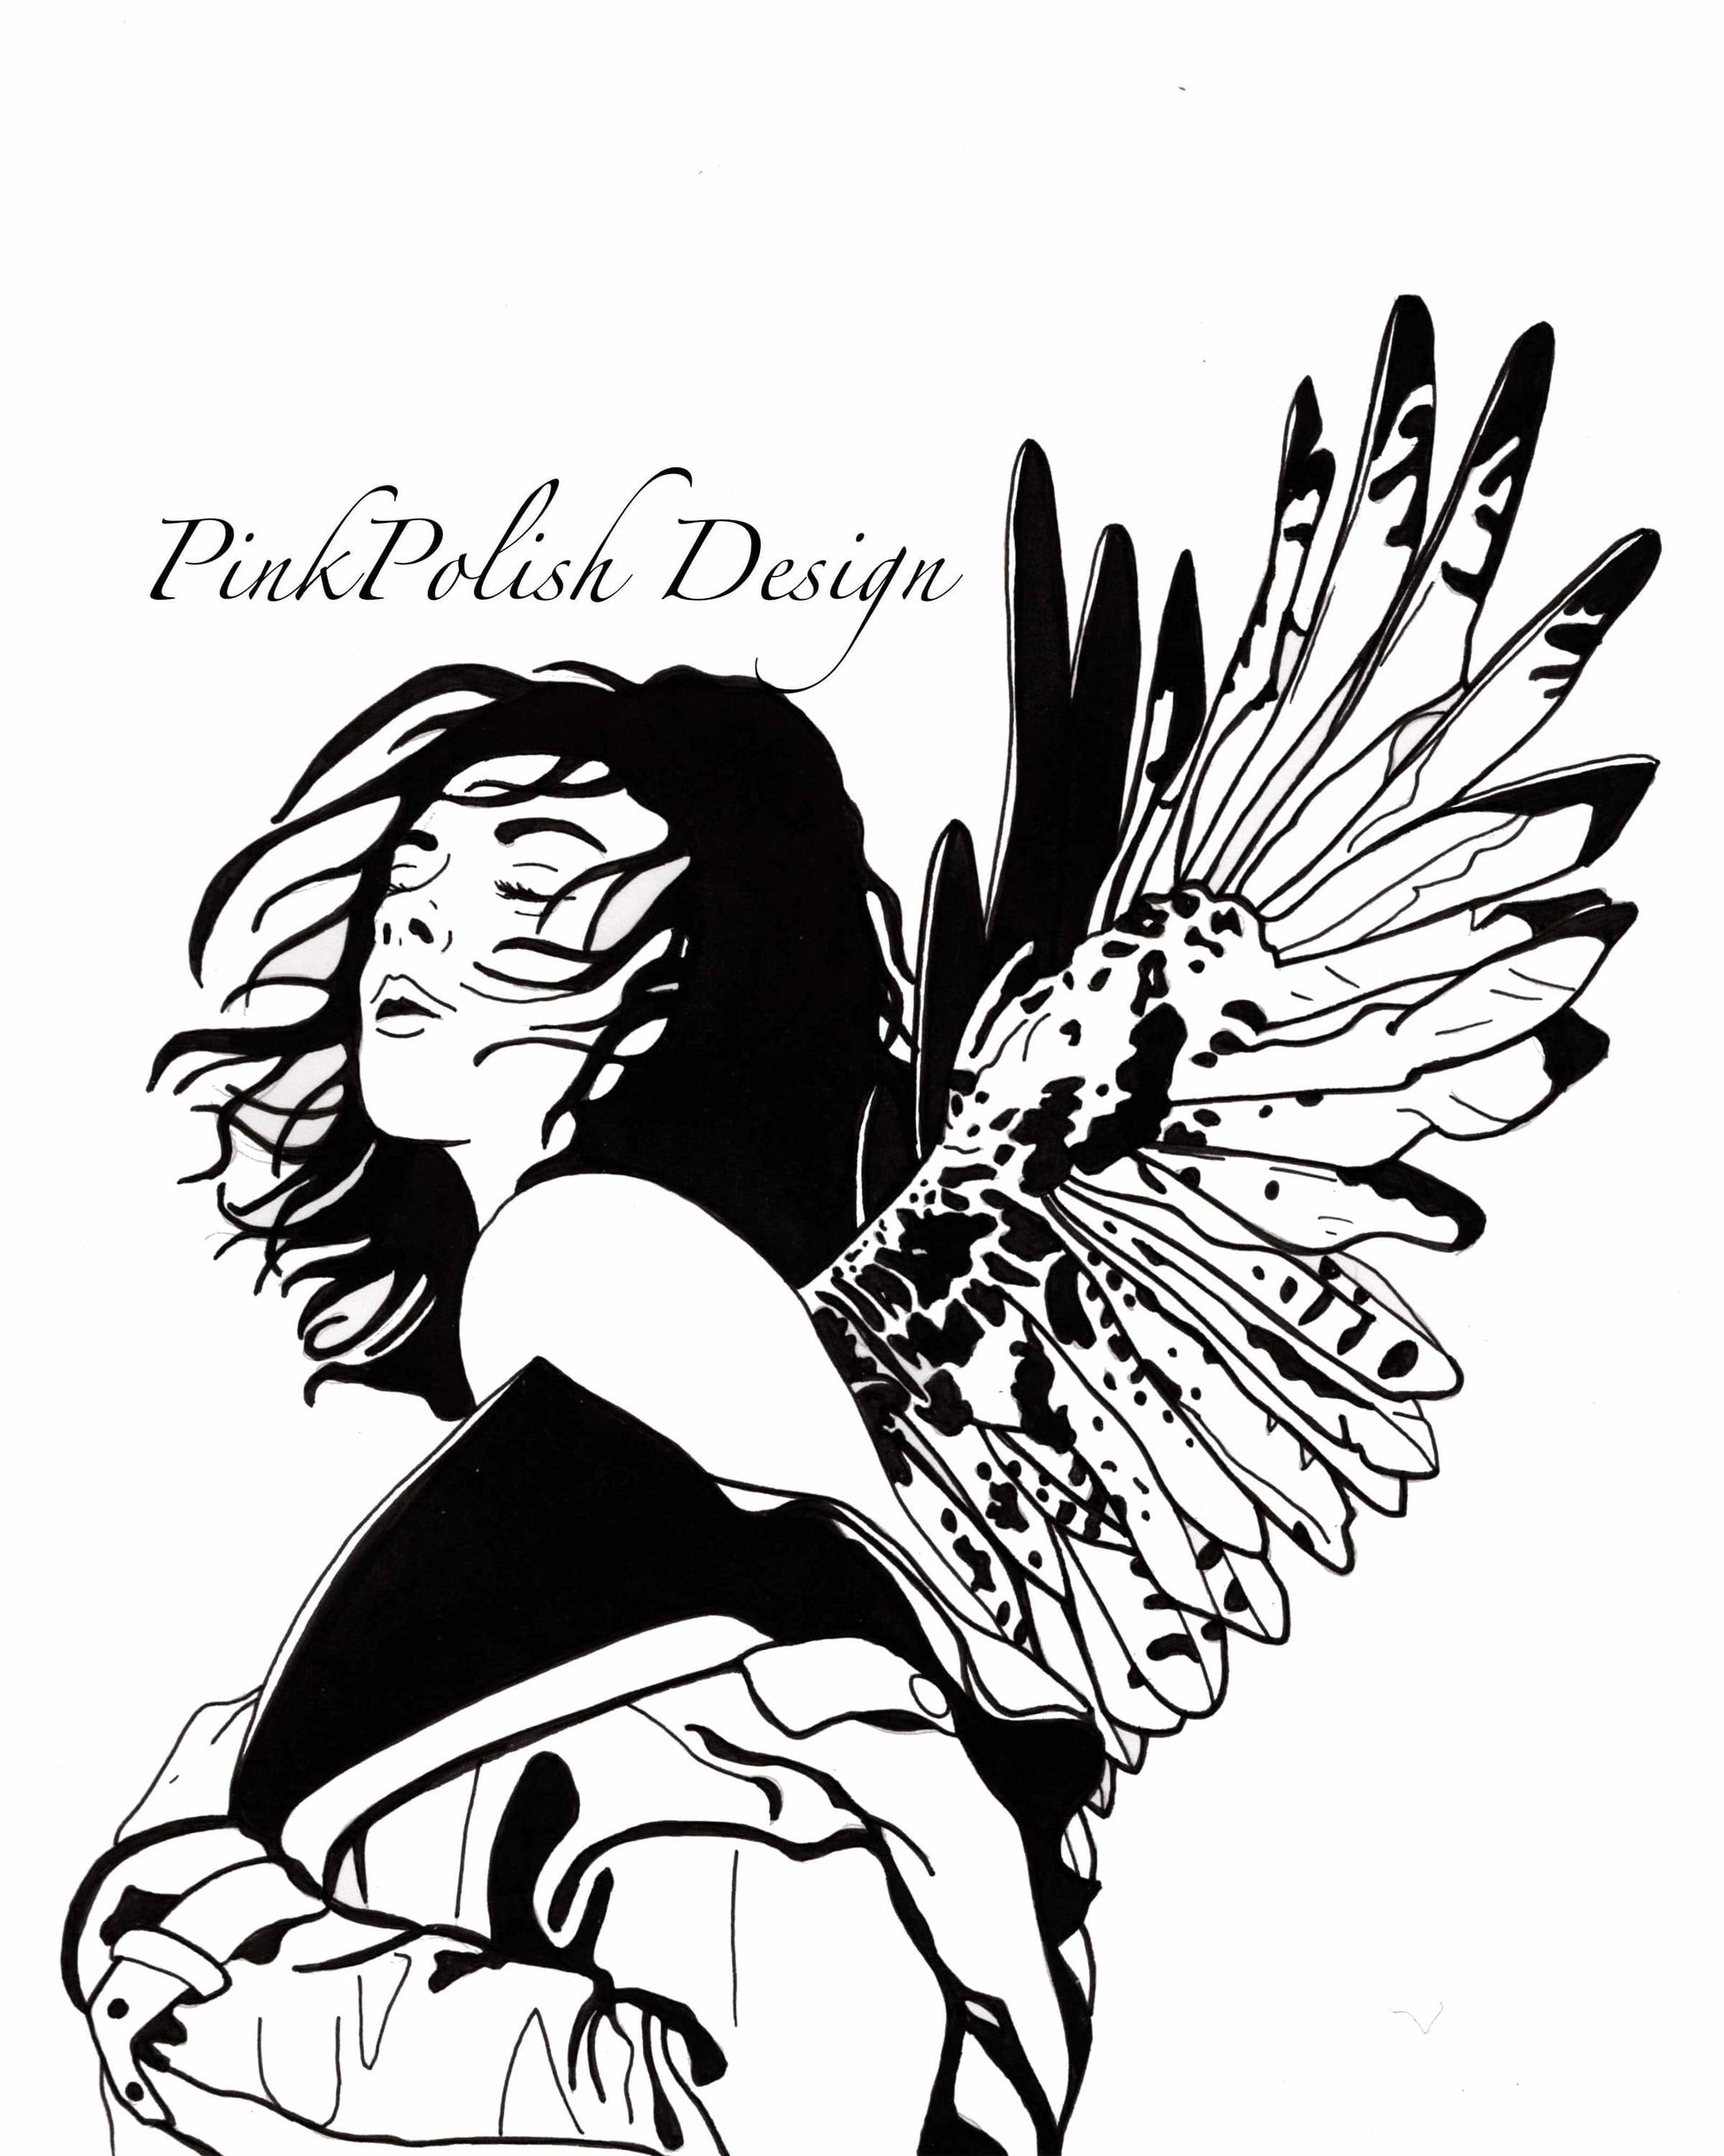 PinkPolish Design Art Prints "Unfurled" Ink Drawing: Art Print